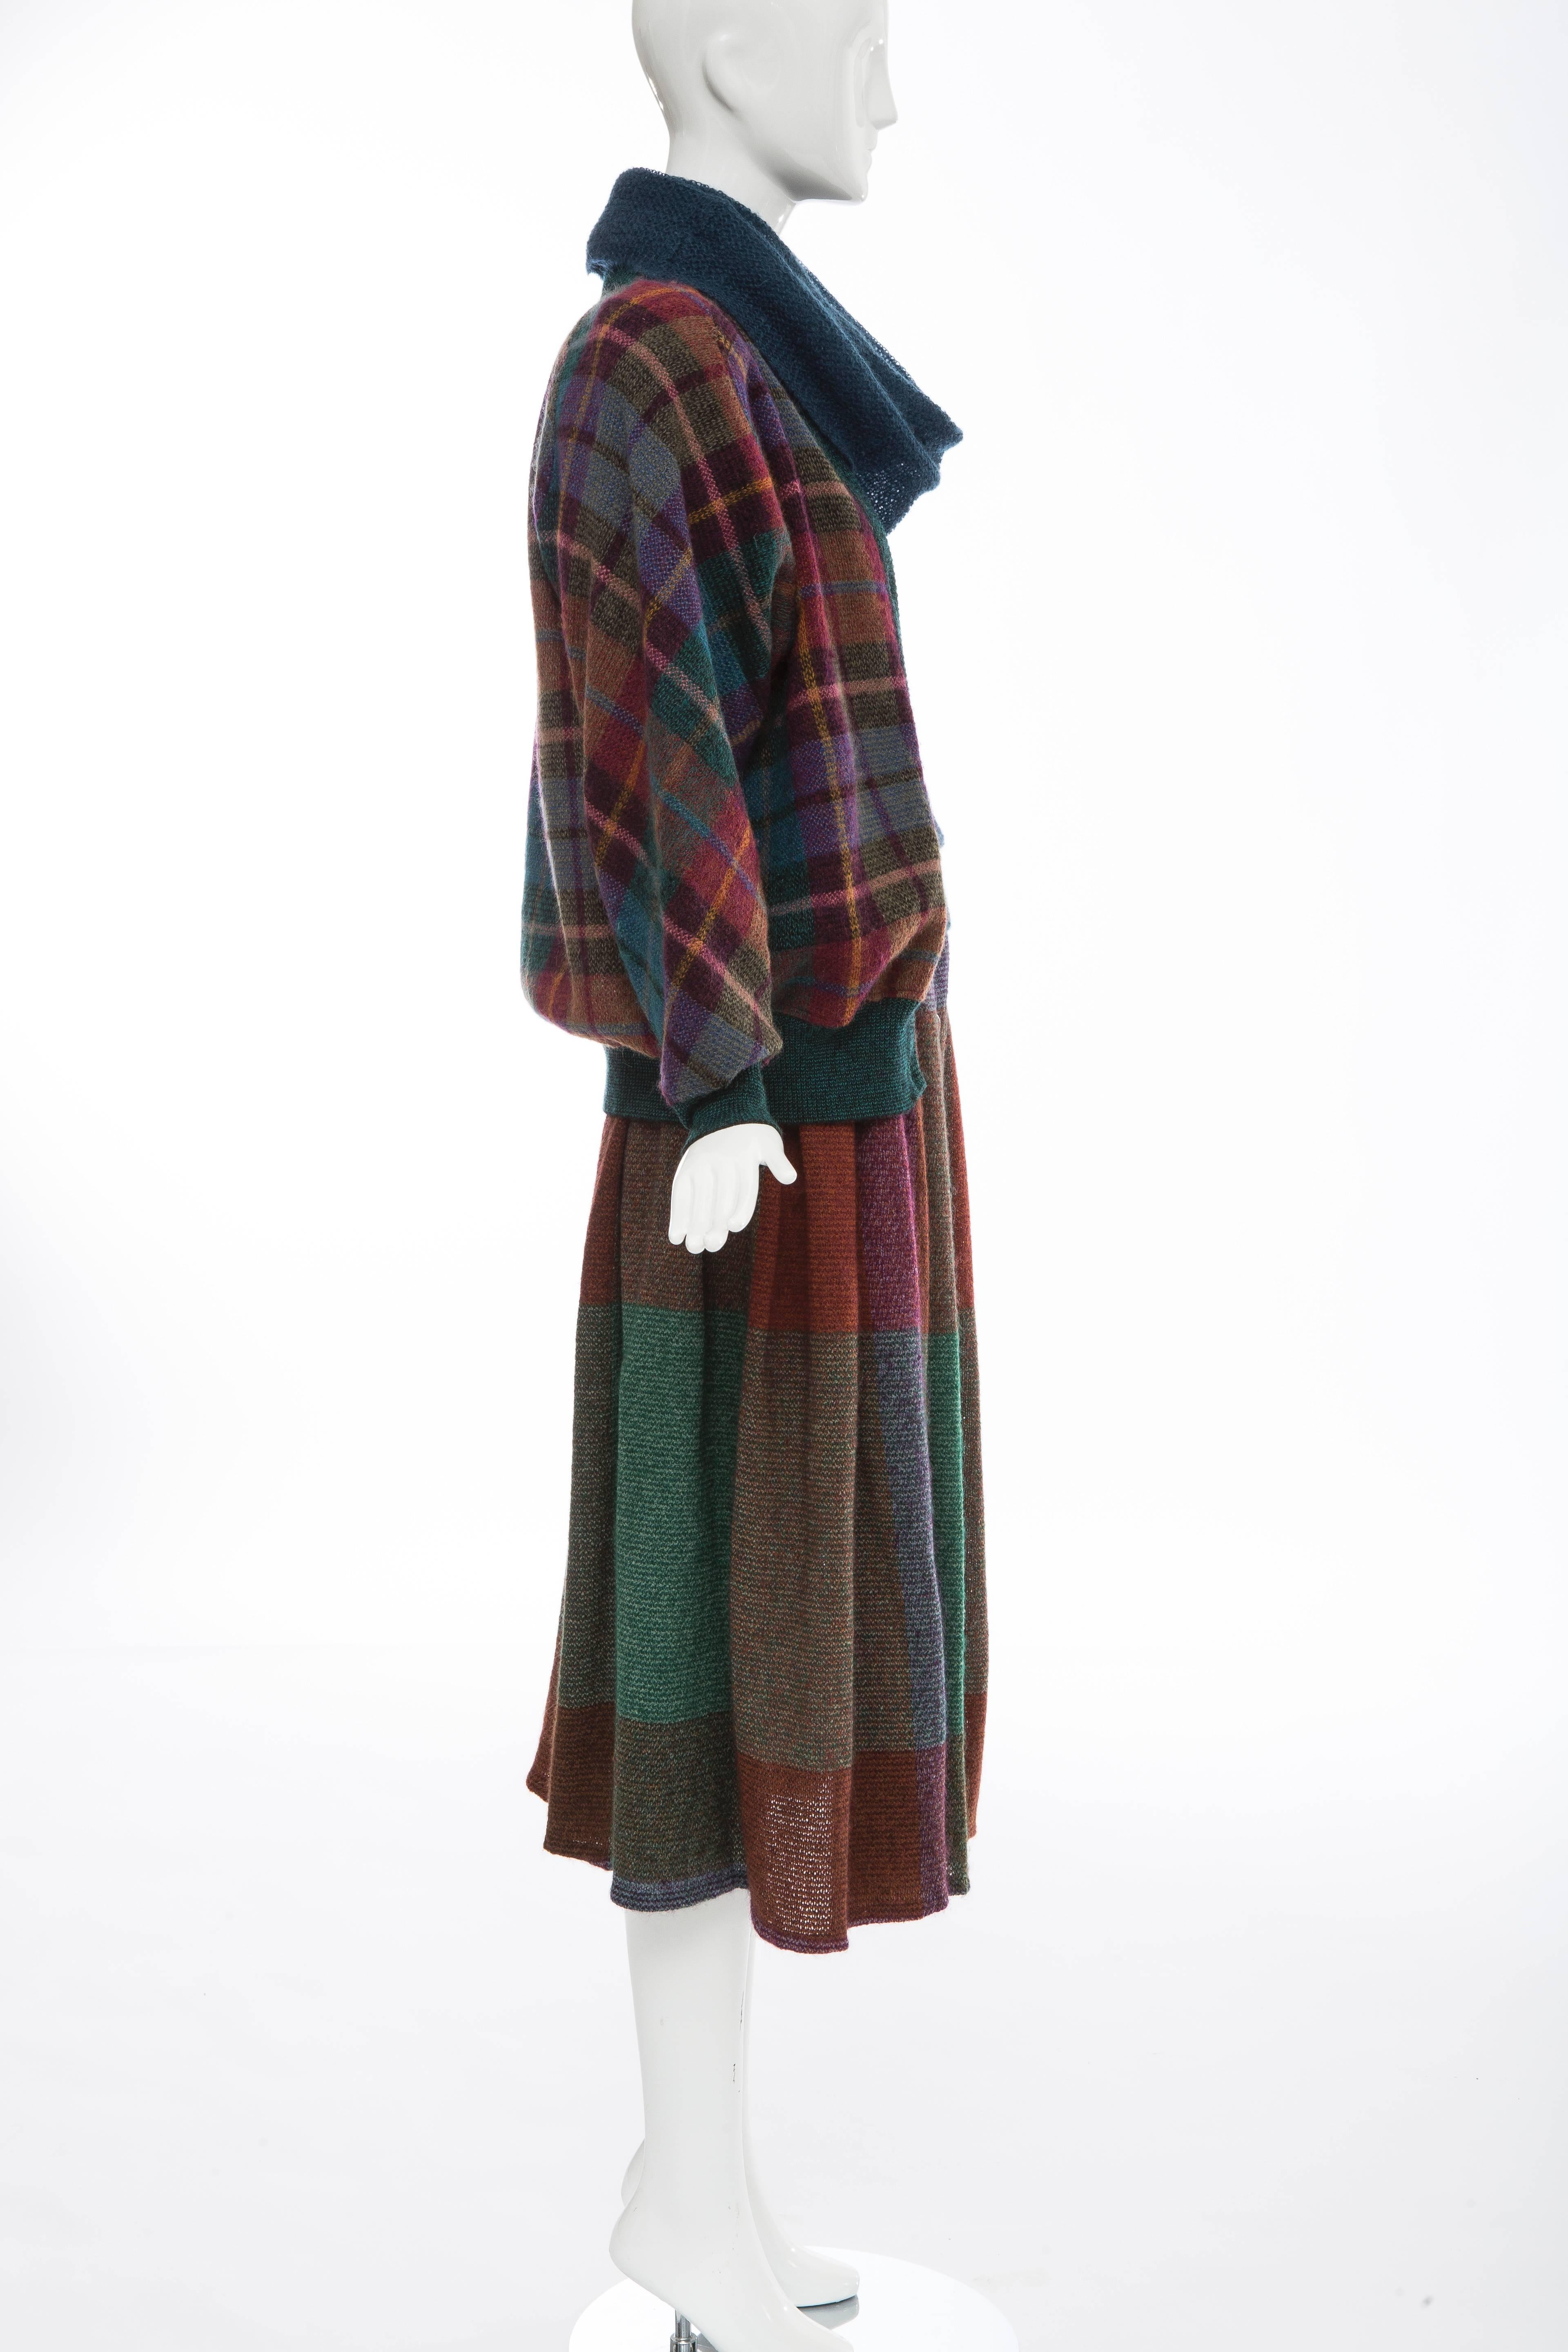 Black Missoni Knit Plaid Tweed Mohair Skirt Suit, Circa 1980's